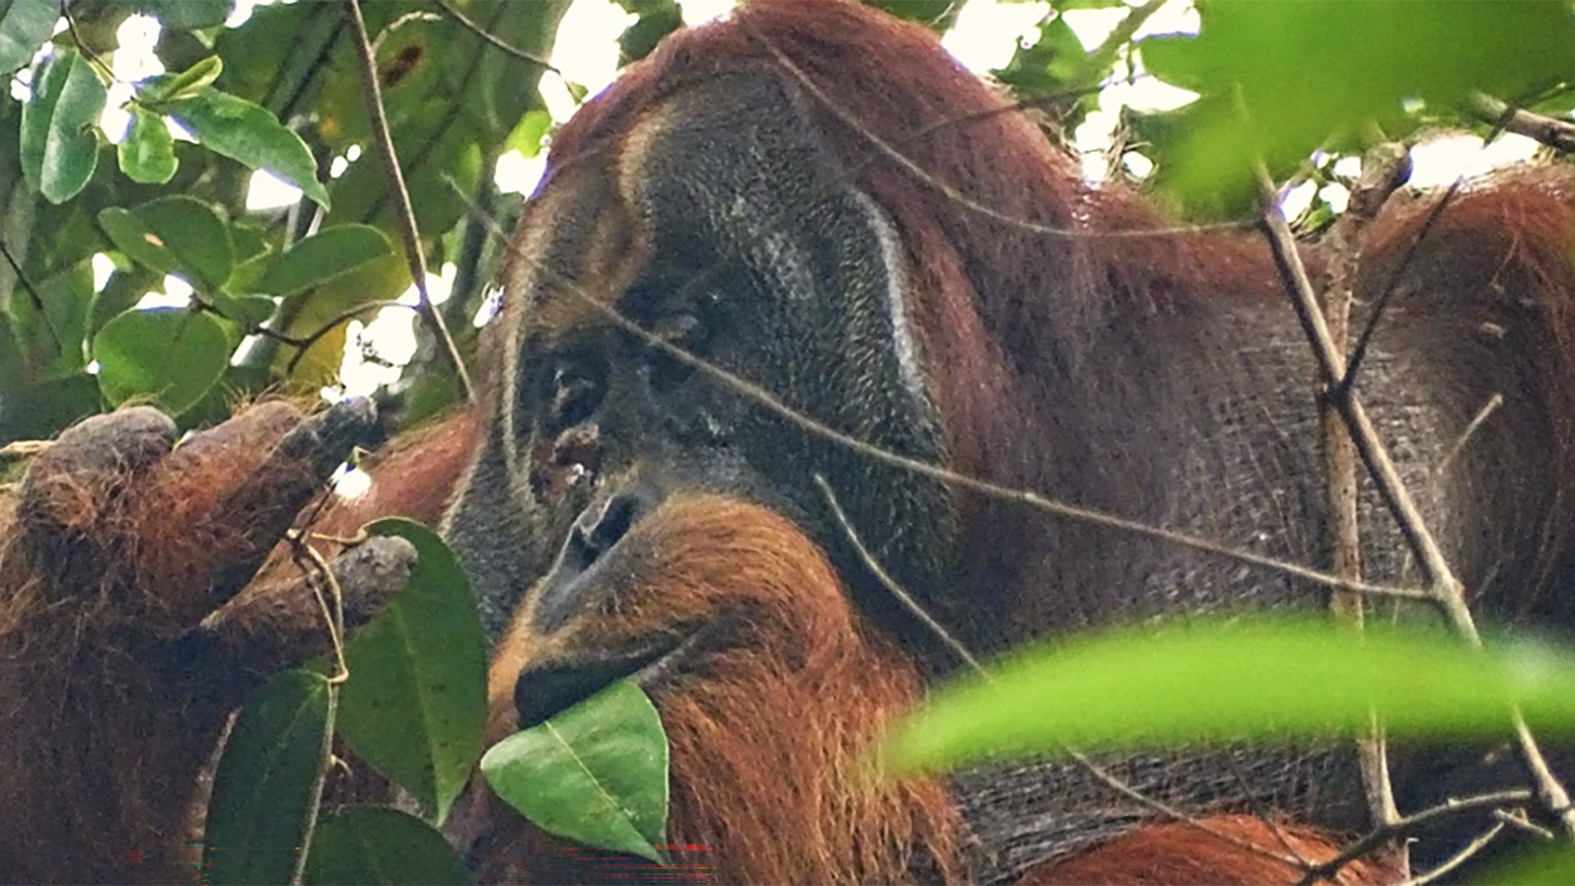 Orangutan seen treating wound with medicinal plant — a first NBC4